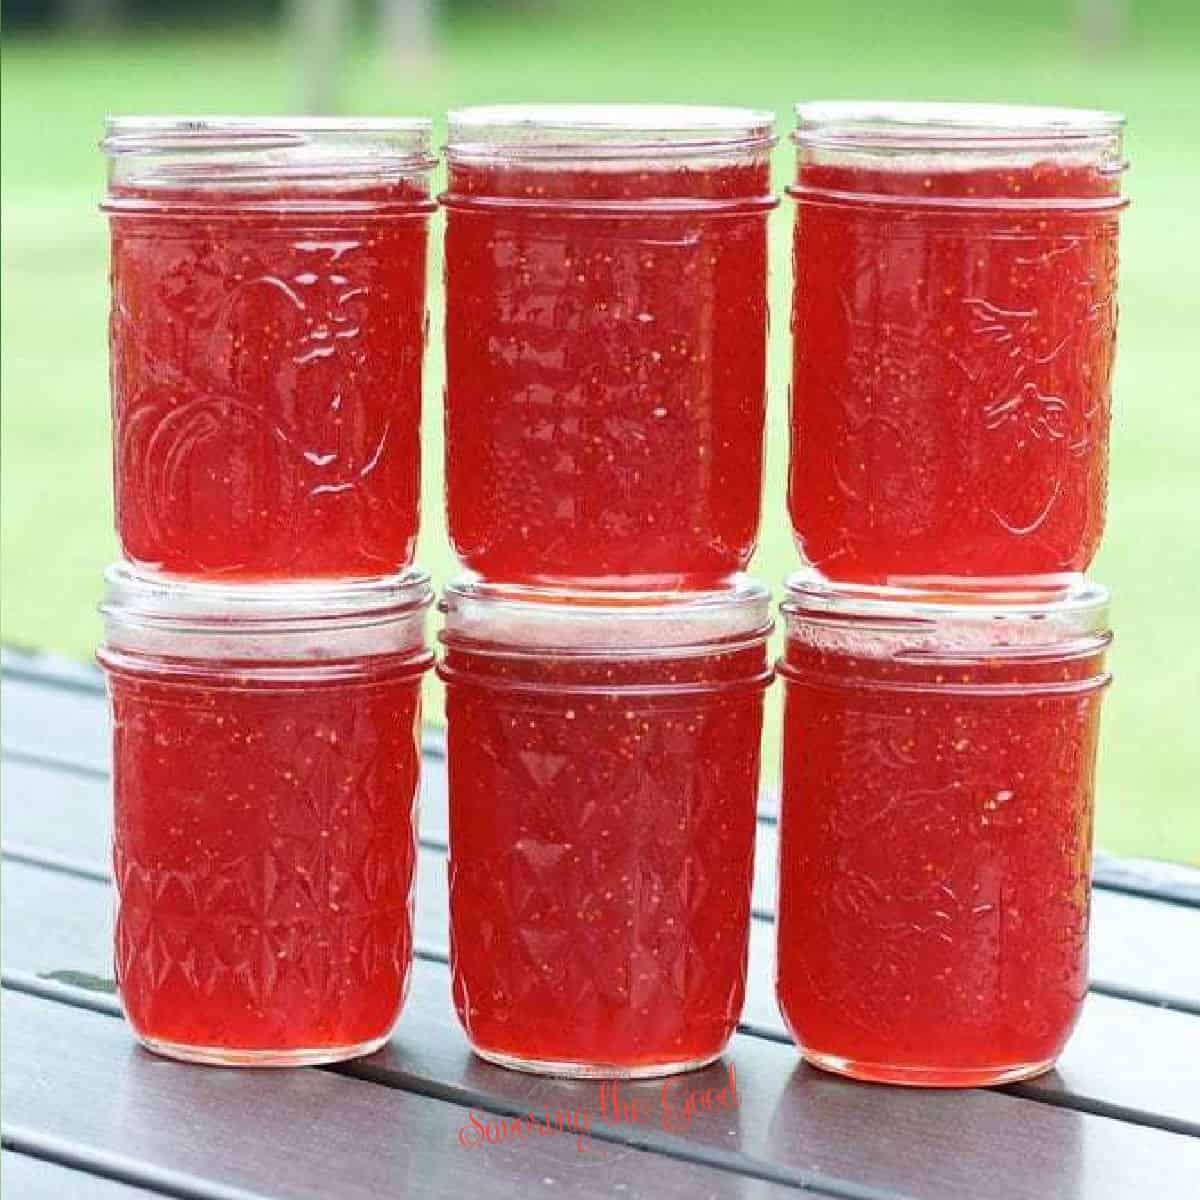 strawberry jam jars stacked.